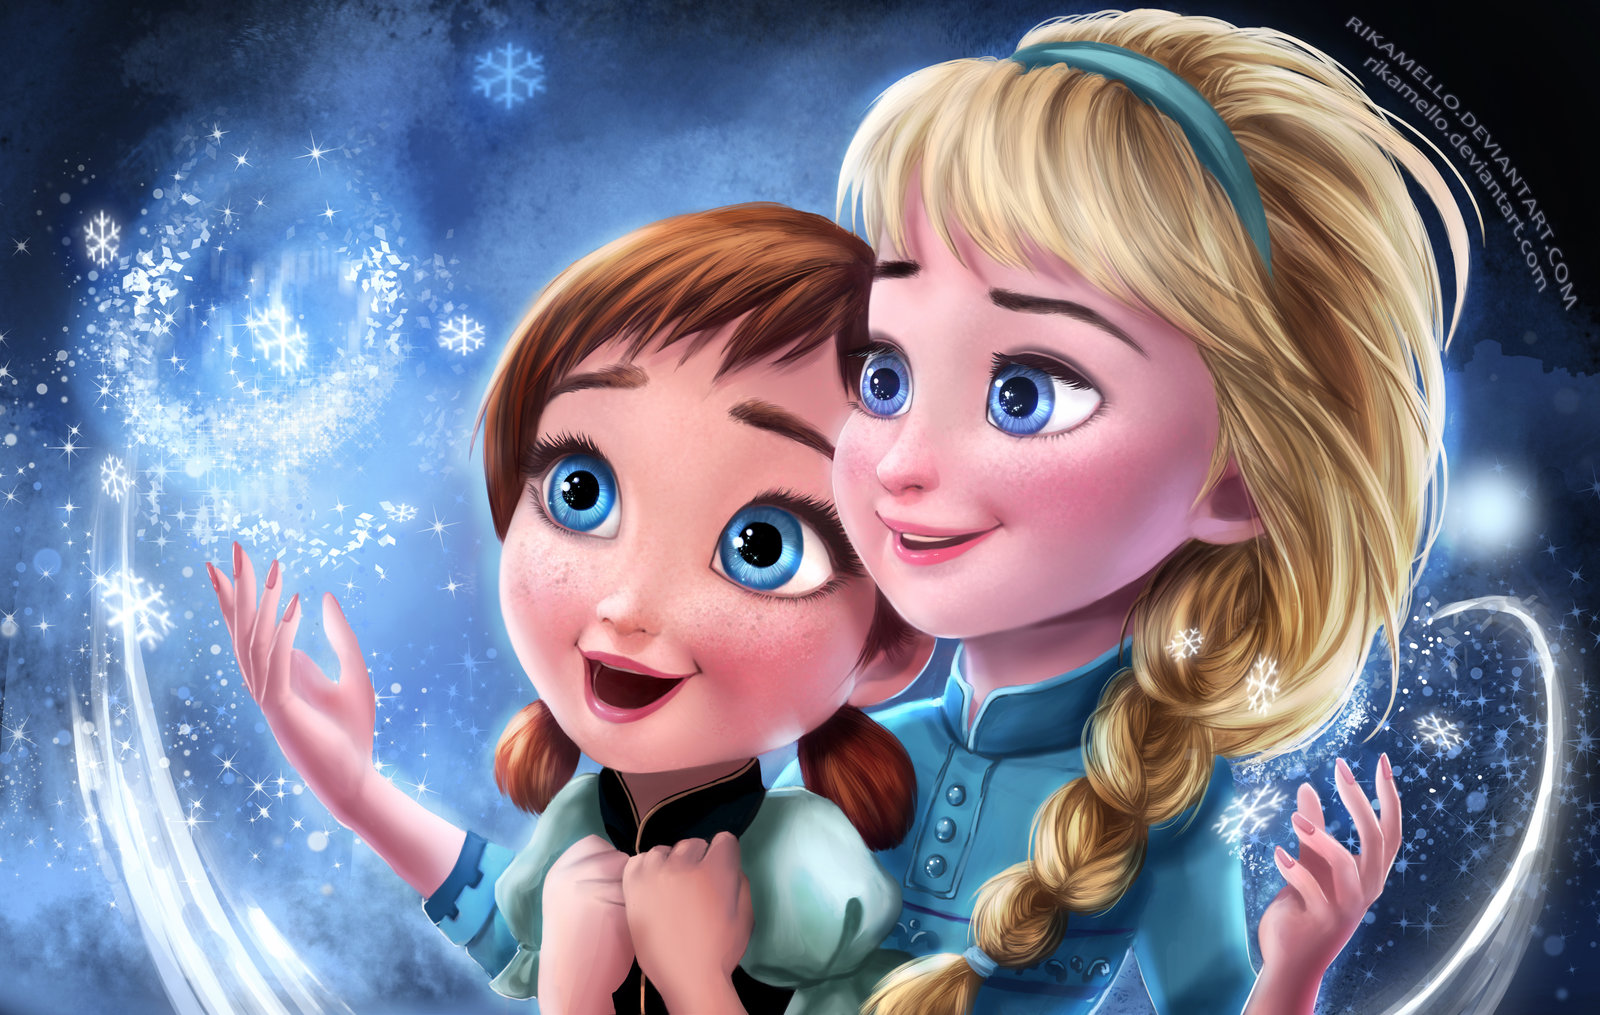 Gambar Kumpulan Gambar Frozen Lucu Terbaru Cartoon Kartun Di